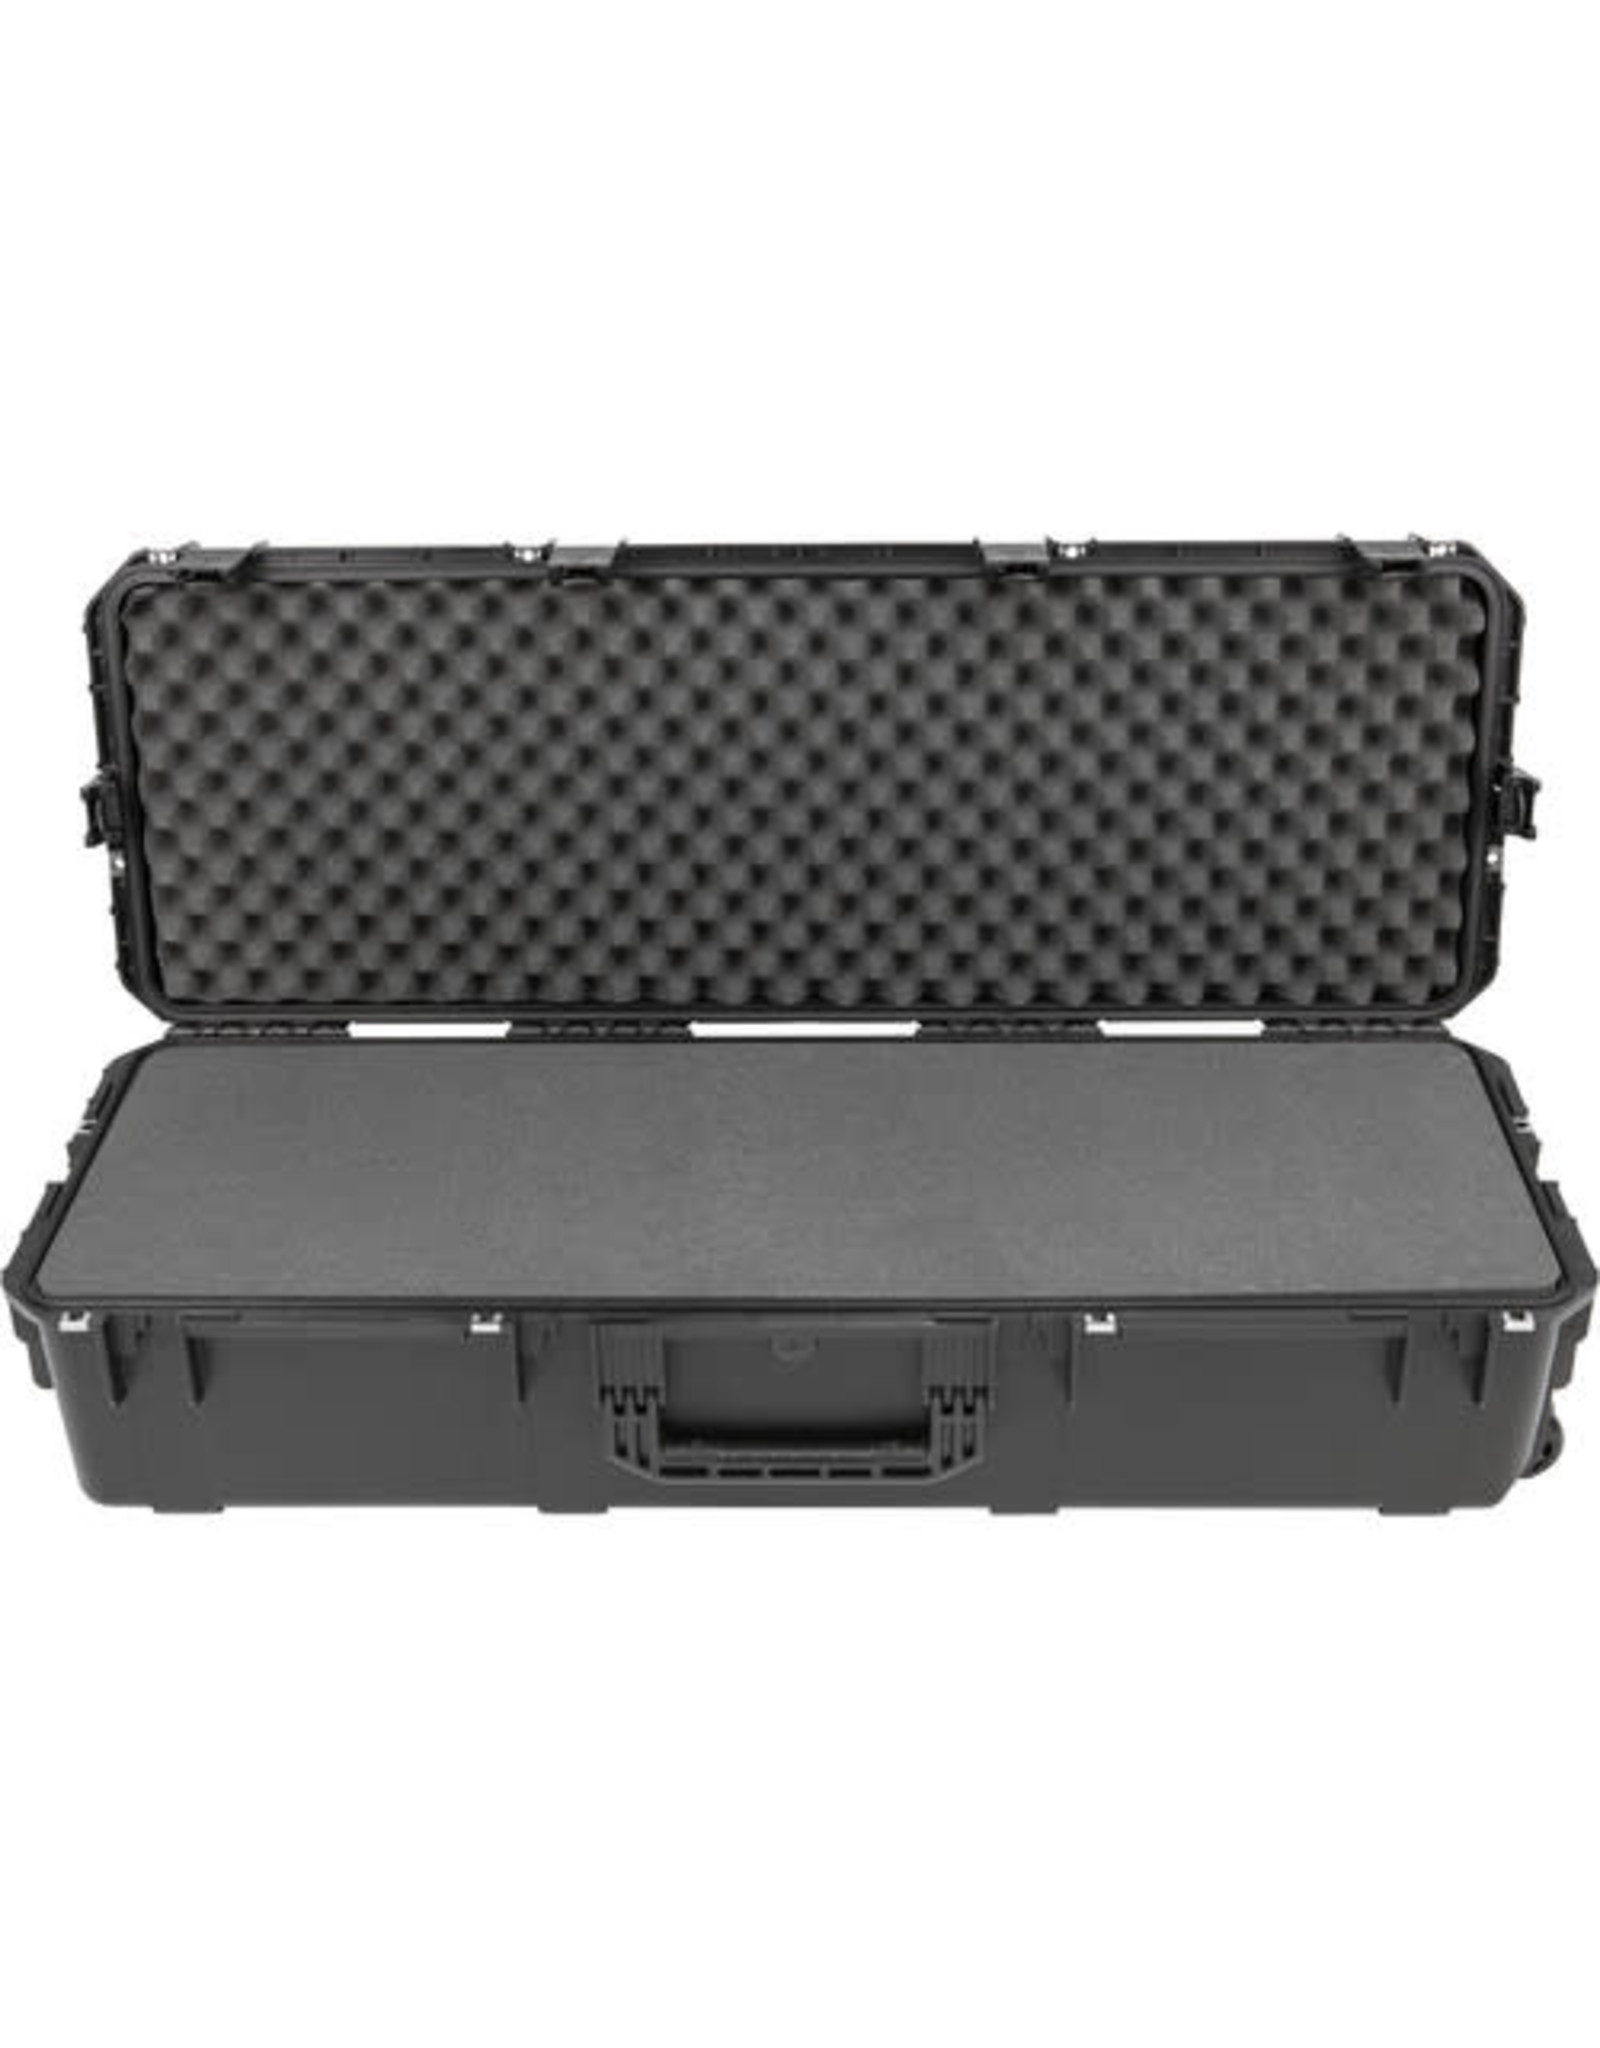 SKB Cases SKB 3i Series 3i-4414-10B-L Wheeled Waterproof Utility Case with Layered Foam (Black) - 3i-4414-10BL